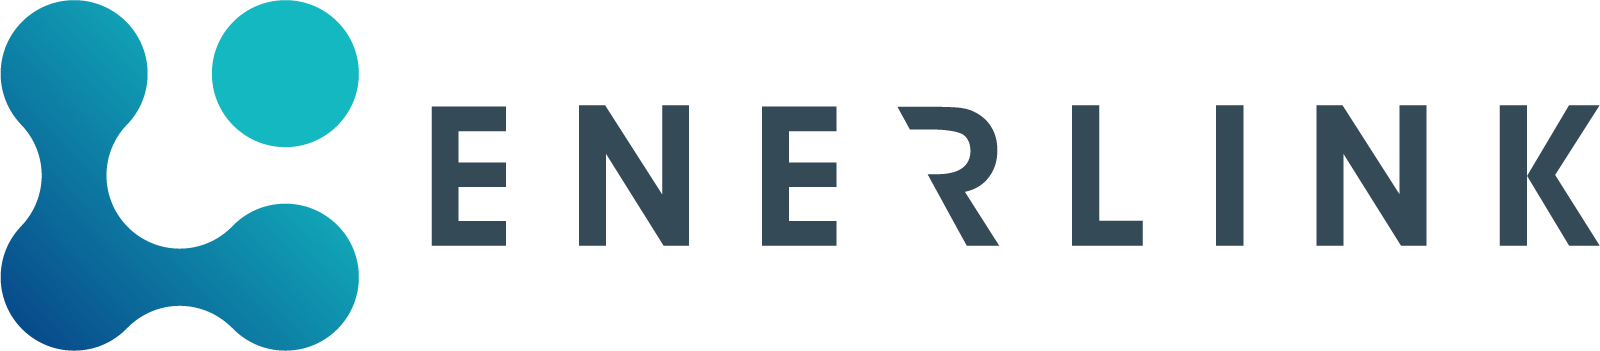 Logo Enerlink horizontal